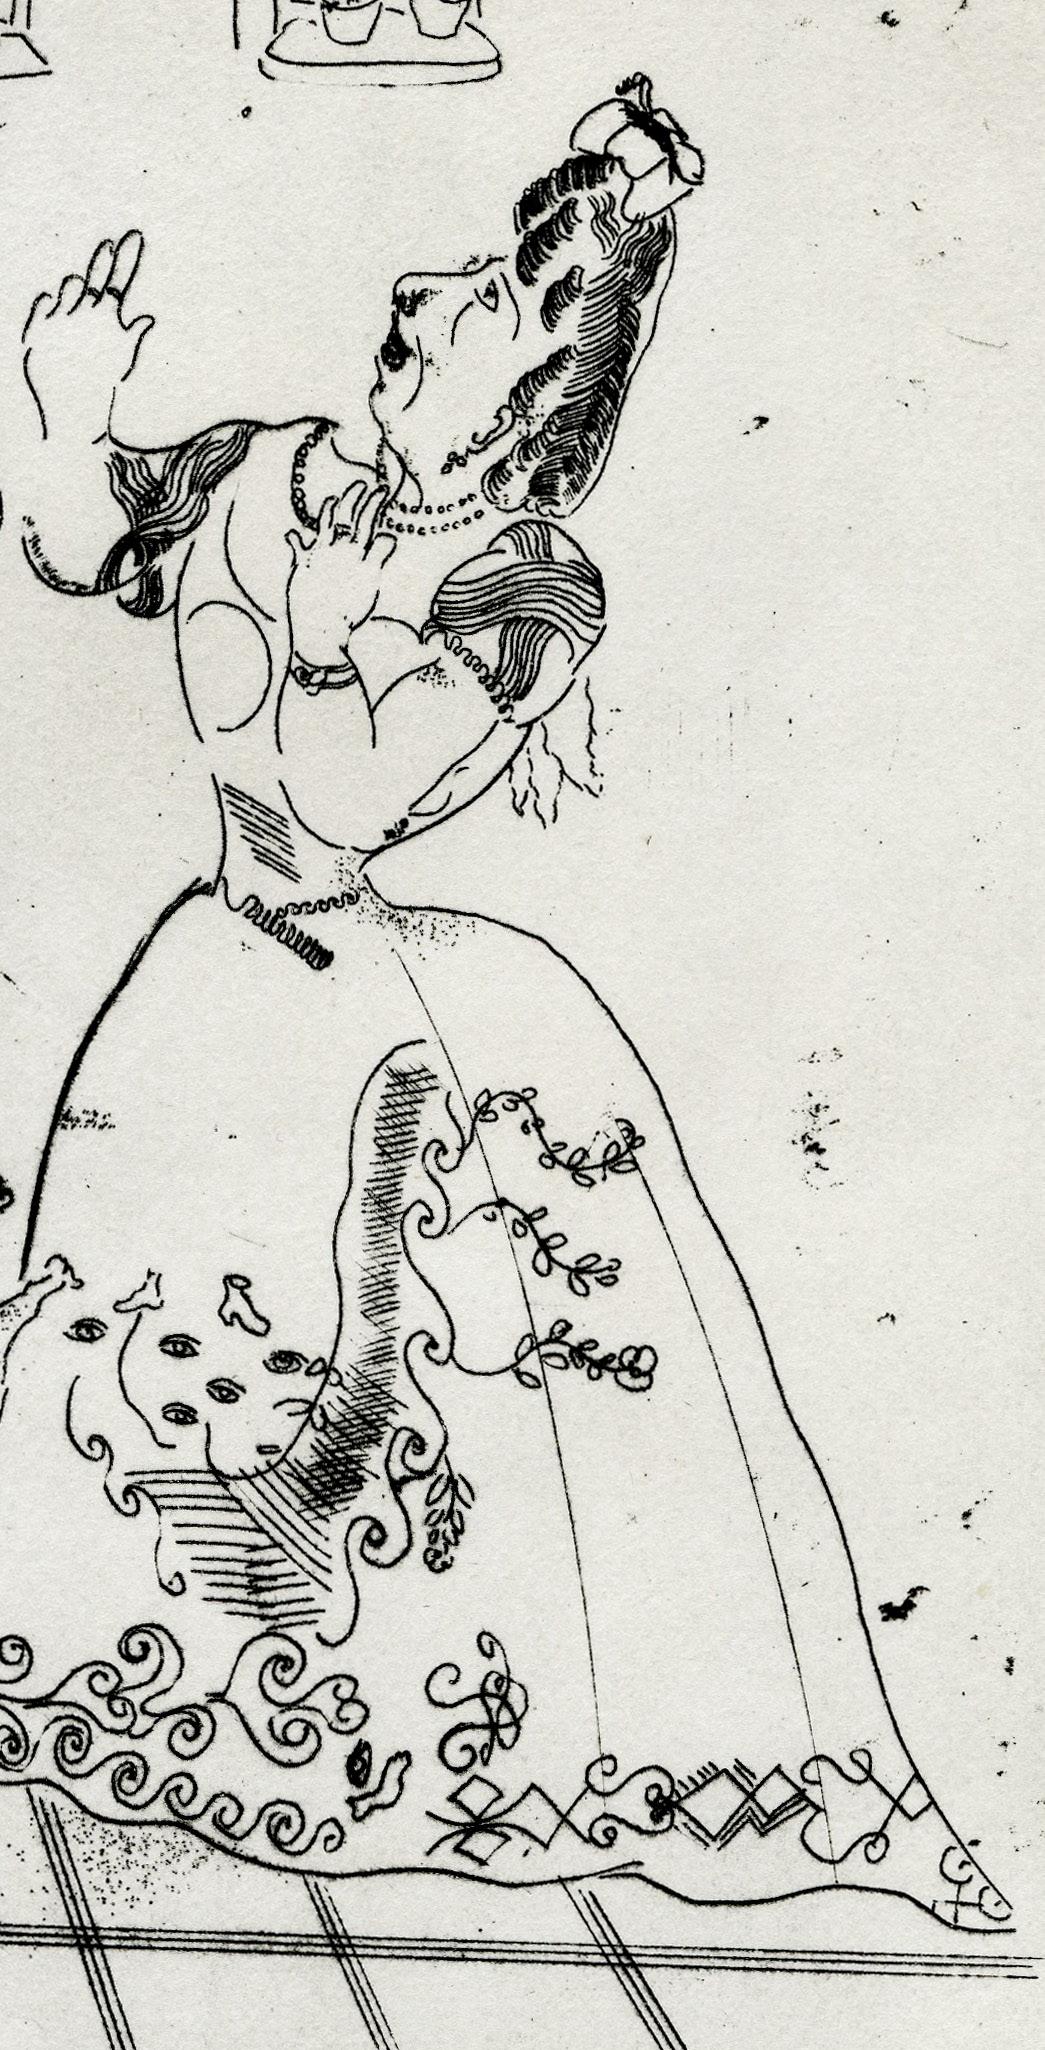 Dames charmante et charmante a tous egard - French School Print by Marc Chagall